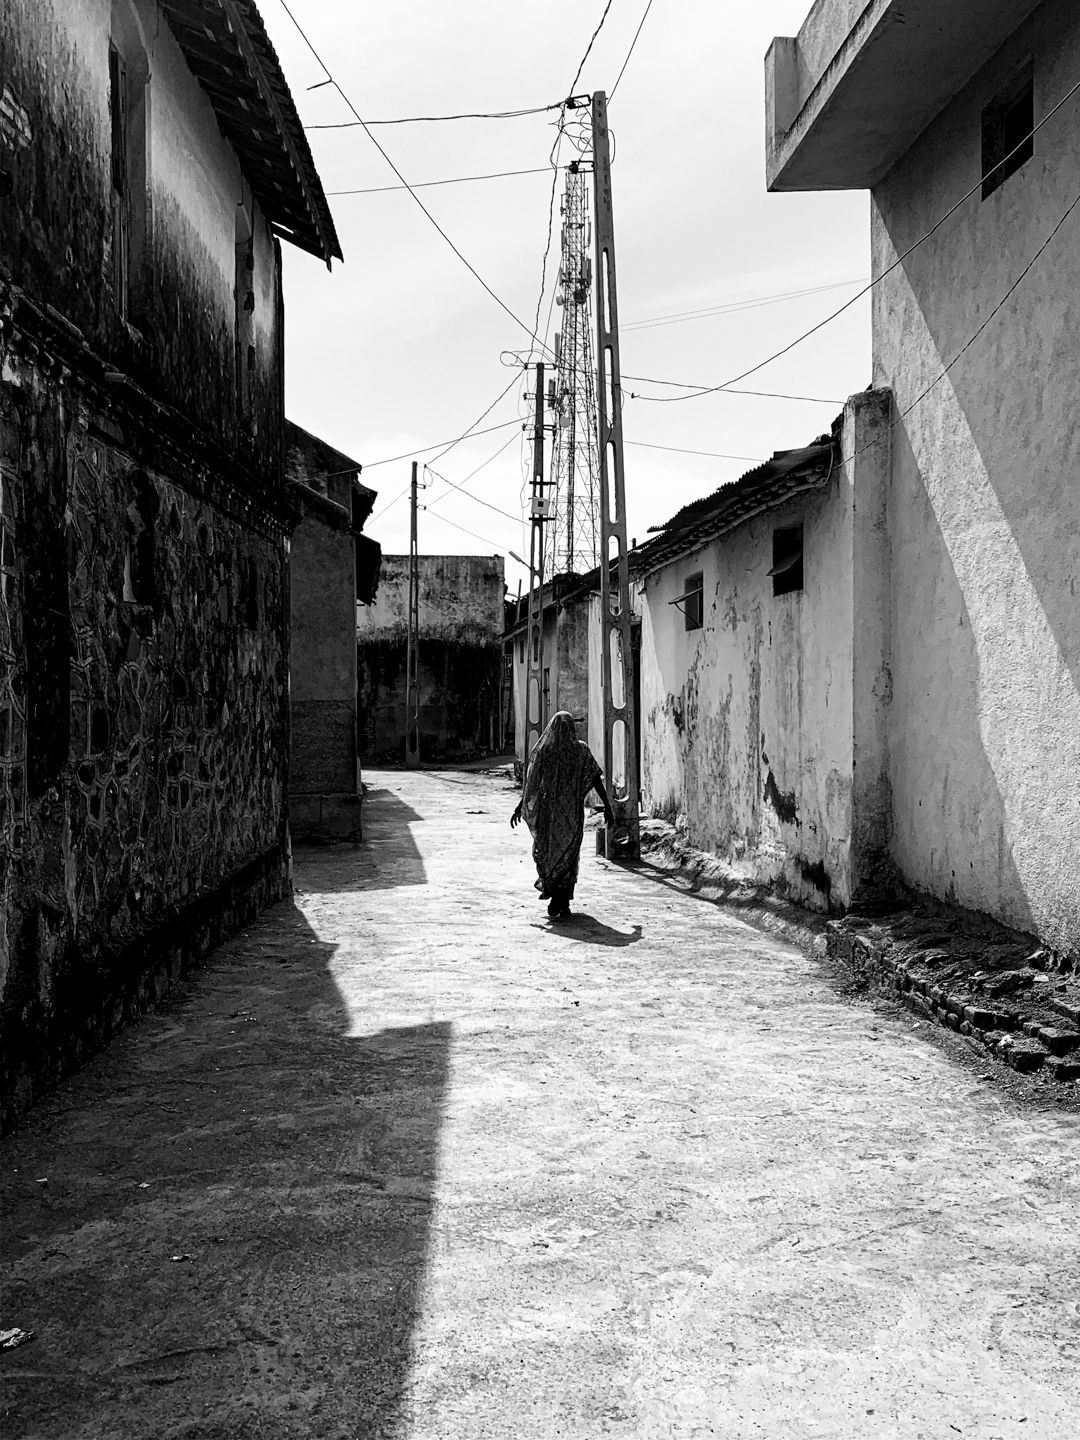 Streets, village, India. © Mohit Patel